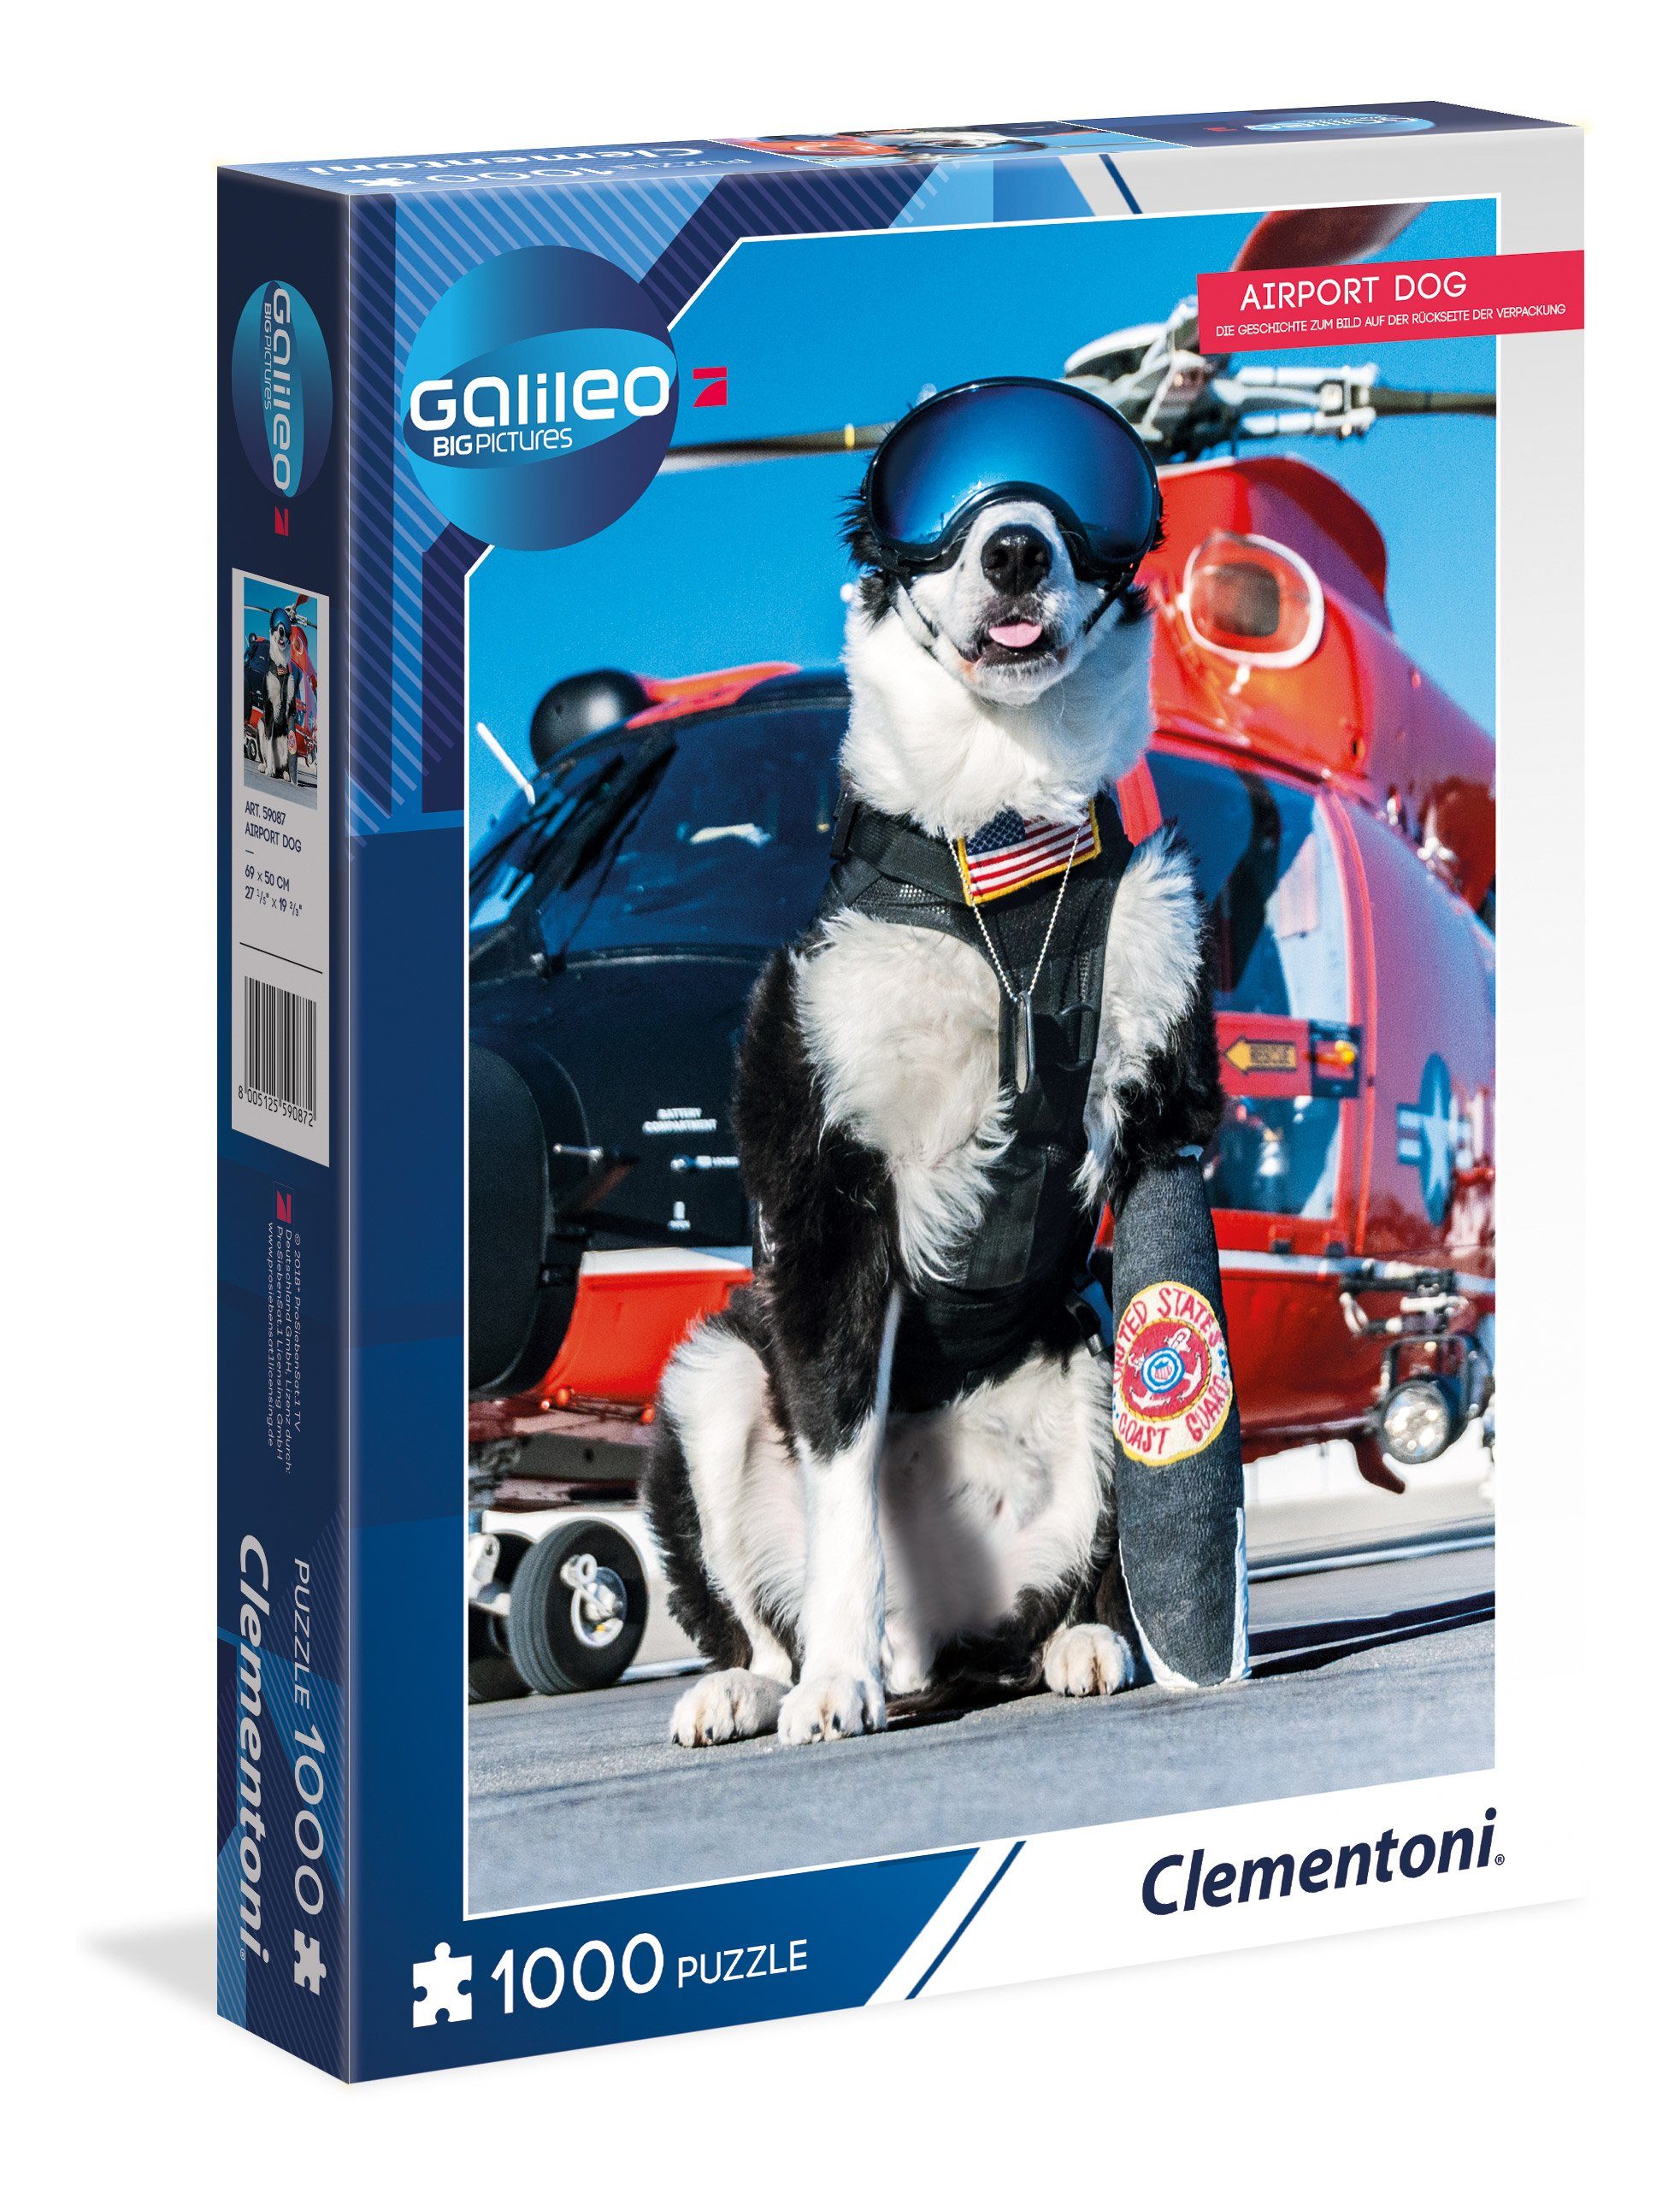 Puzzleteile Teile Galileo Dog Airport Clementoni® Puzzle, 1000 Puzzle 59087 1000